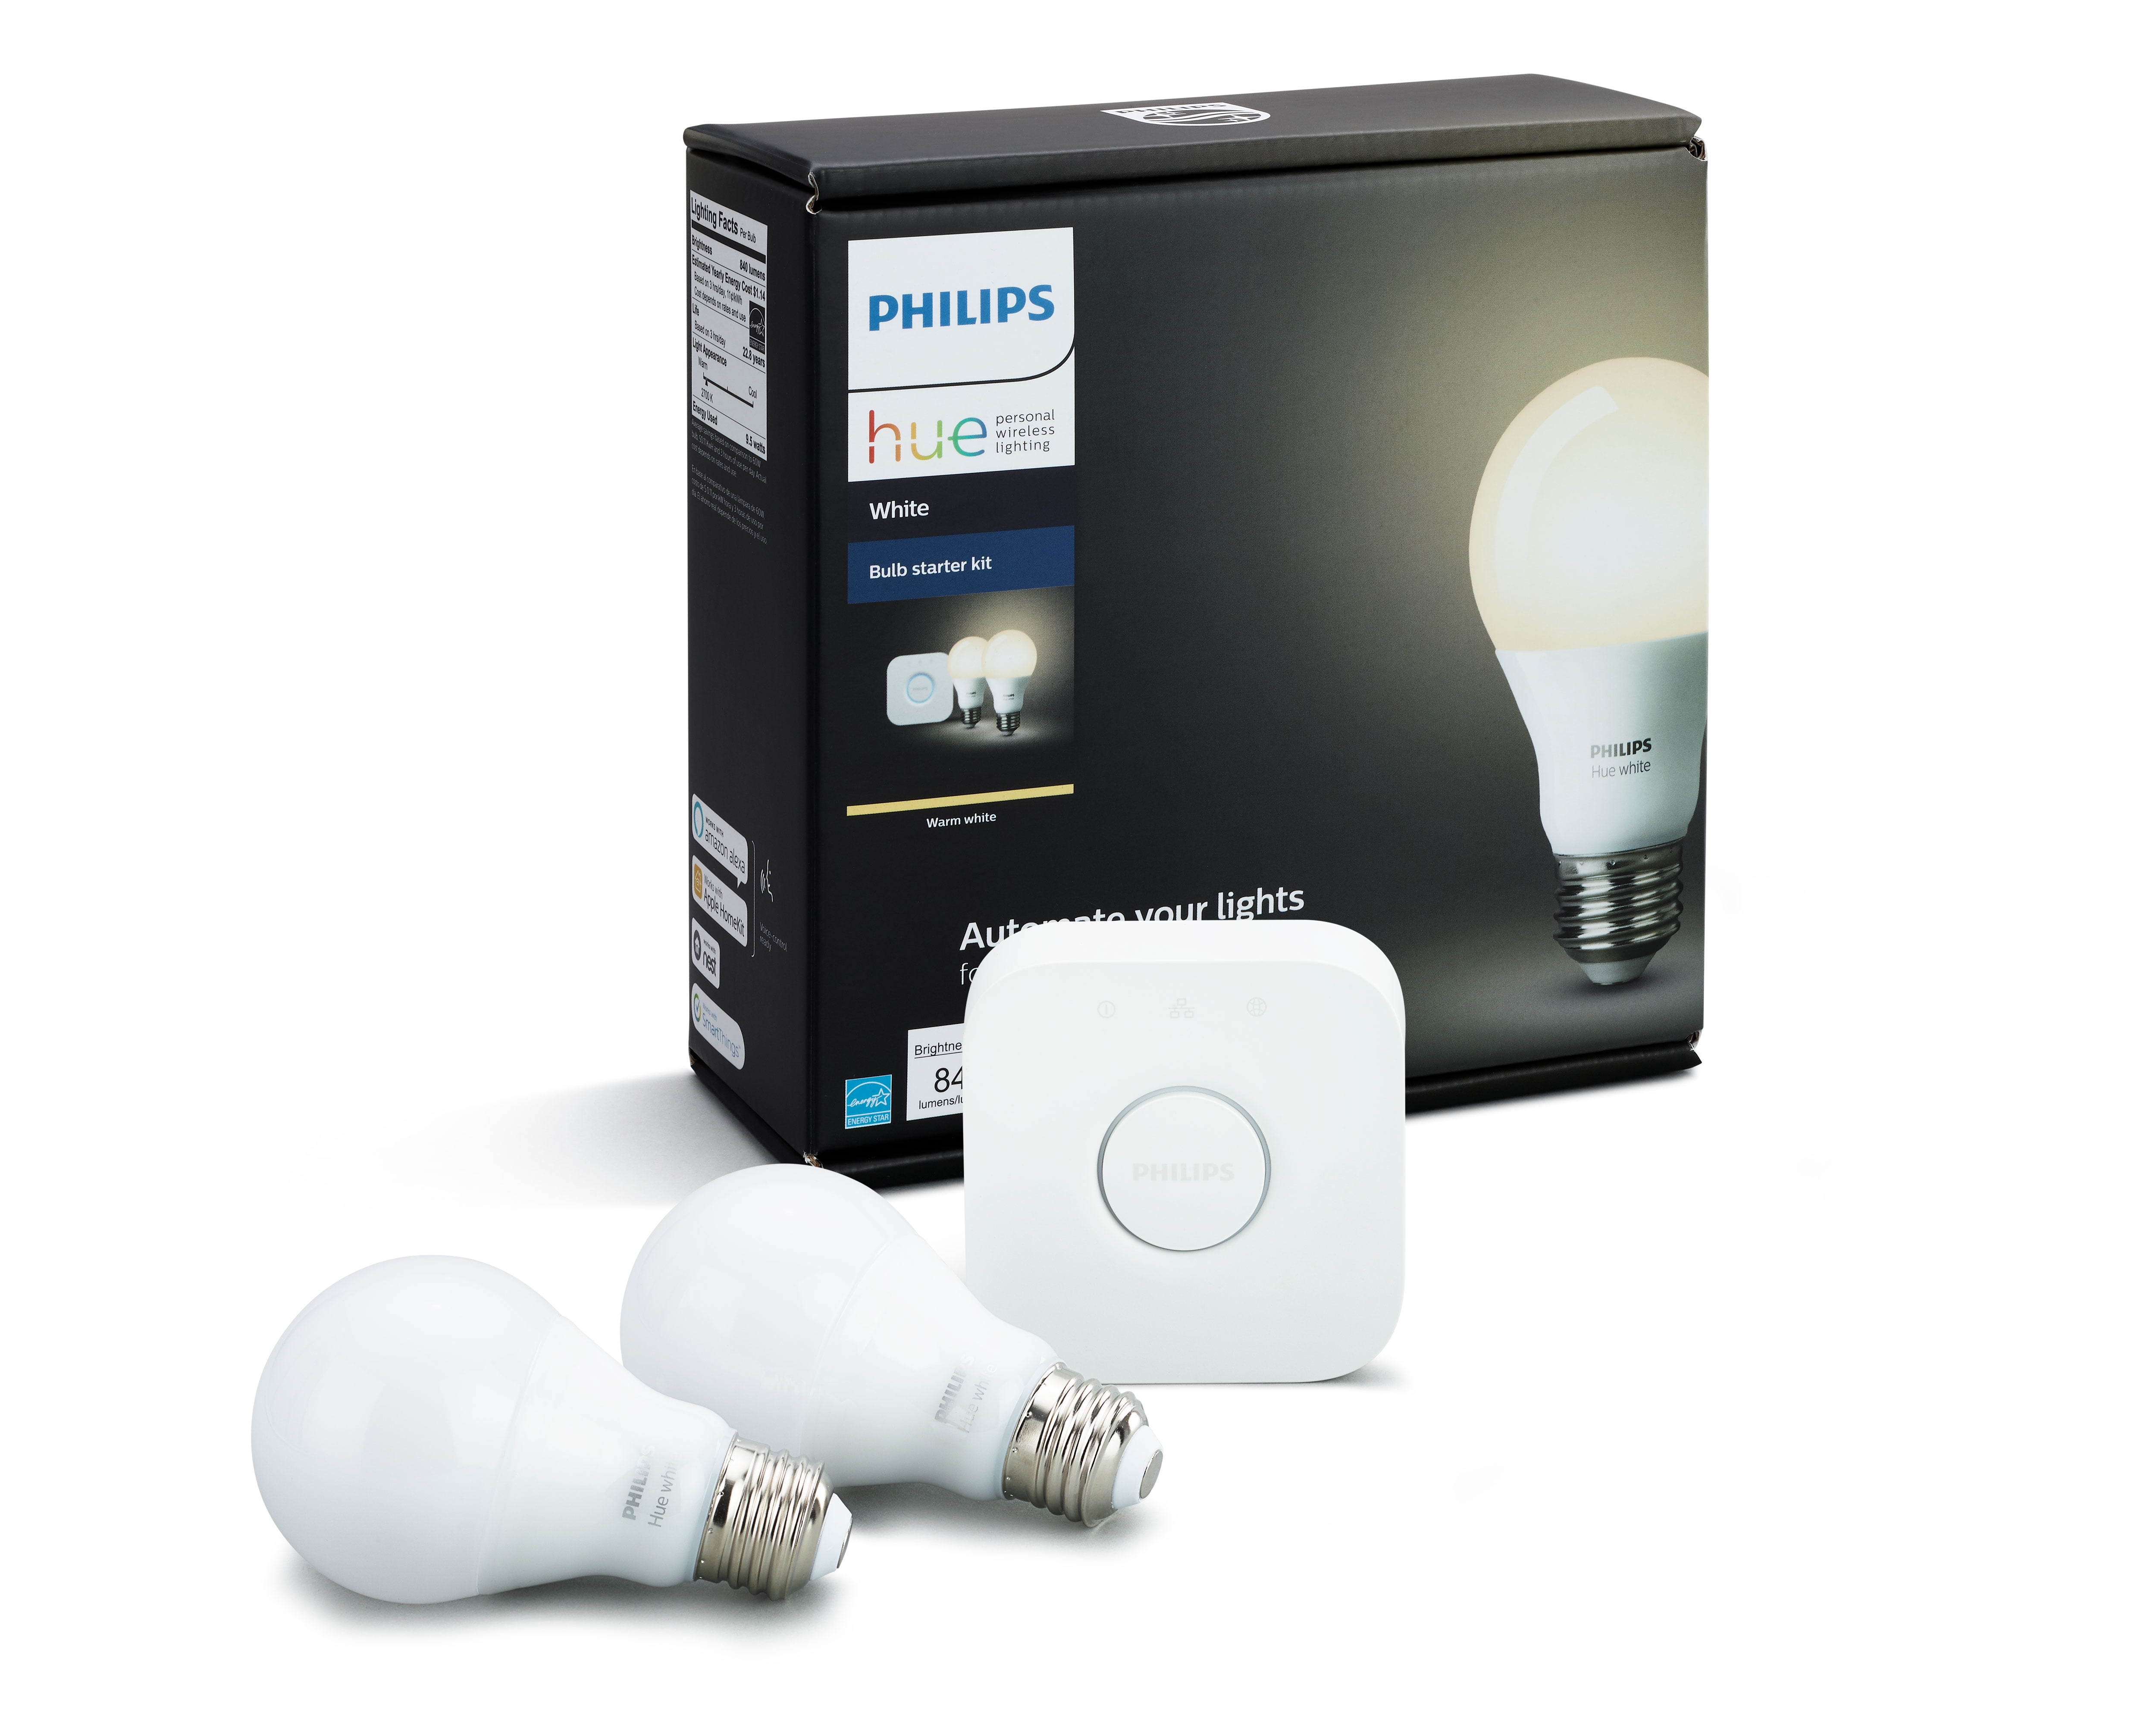 White Philips Hue A19 60W LED Smart Light Bulb for sale online 530337 